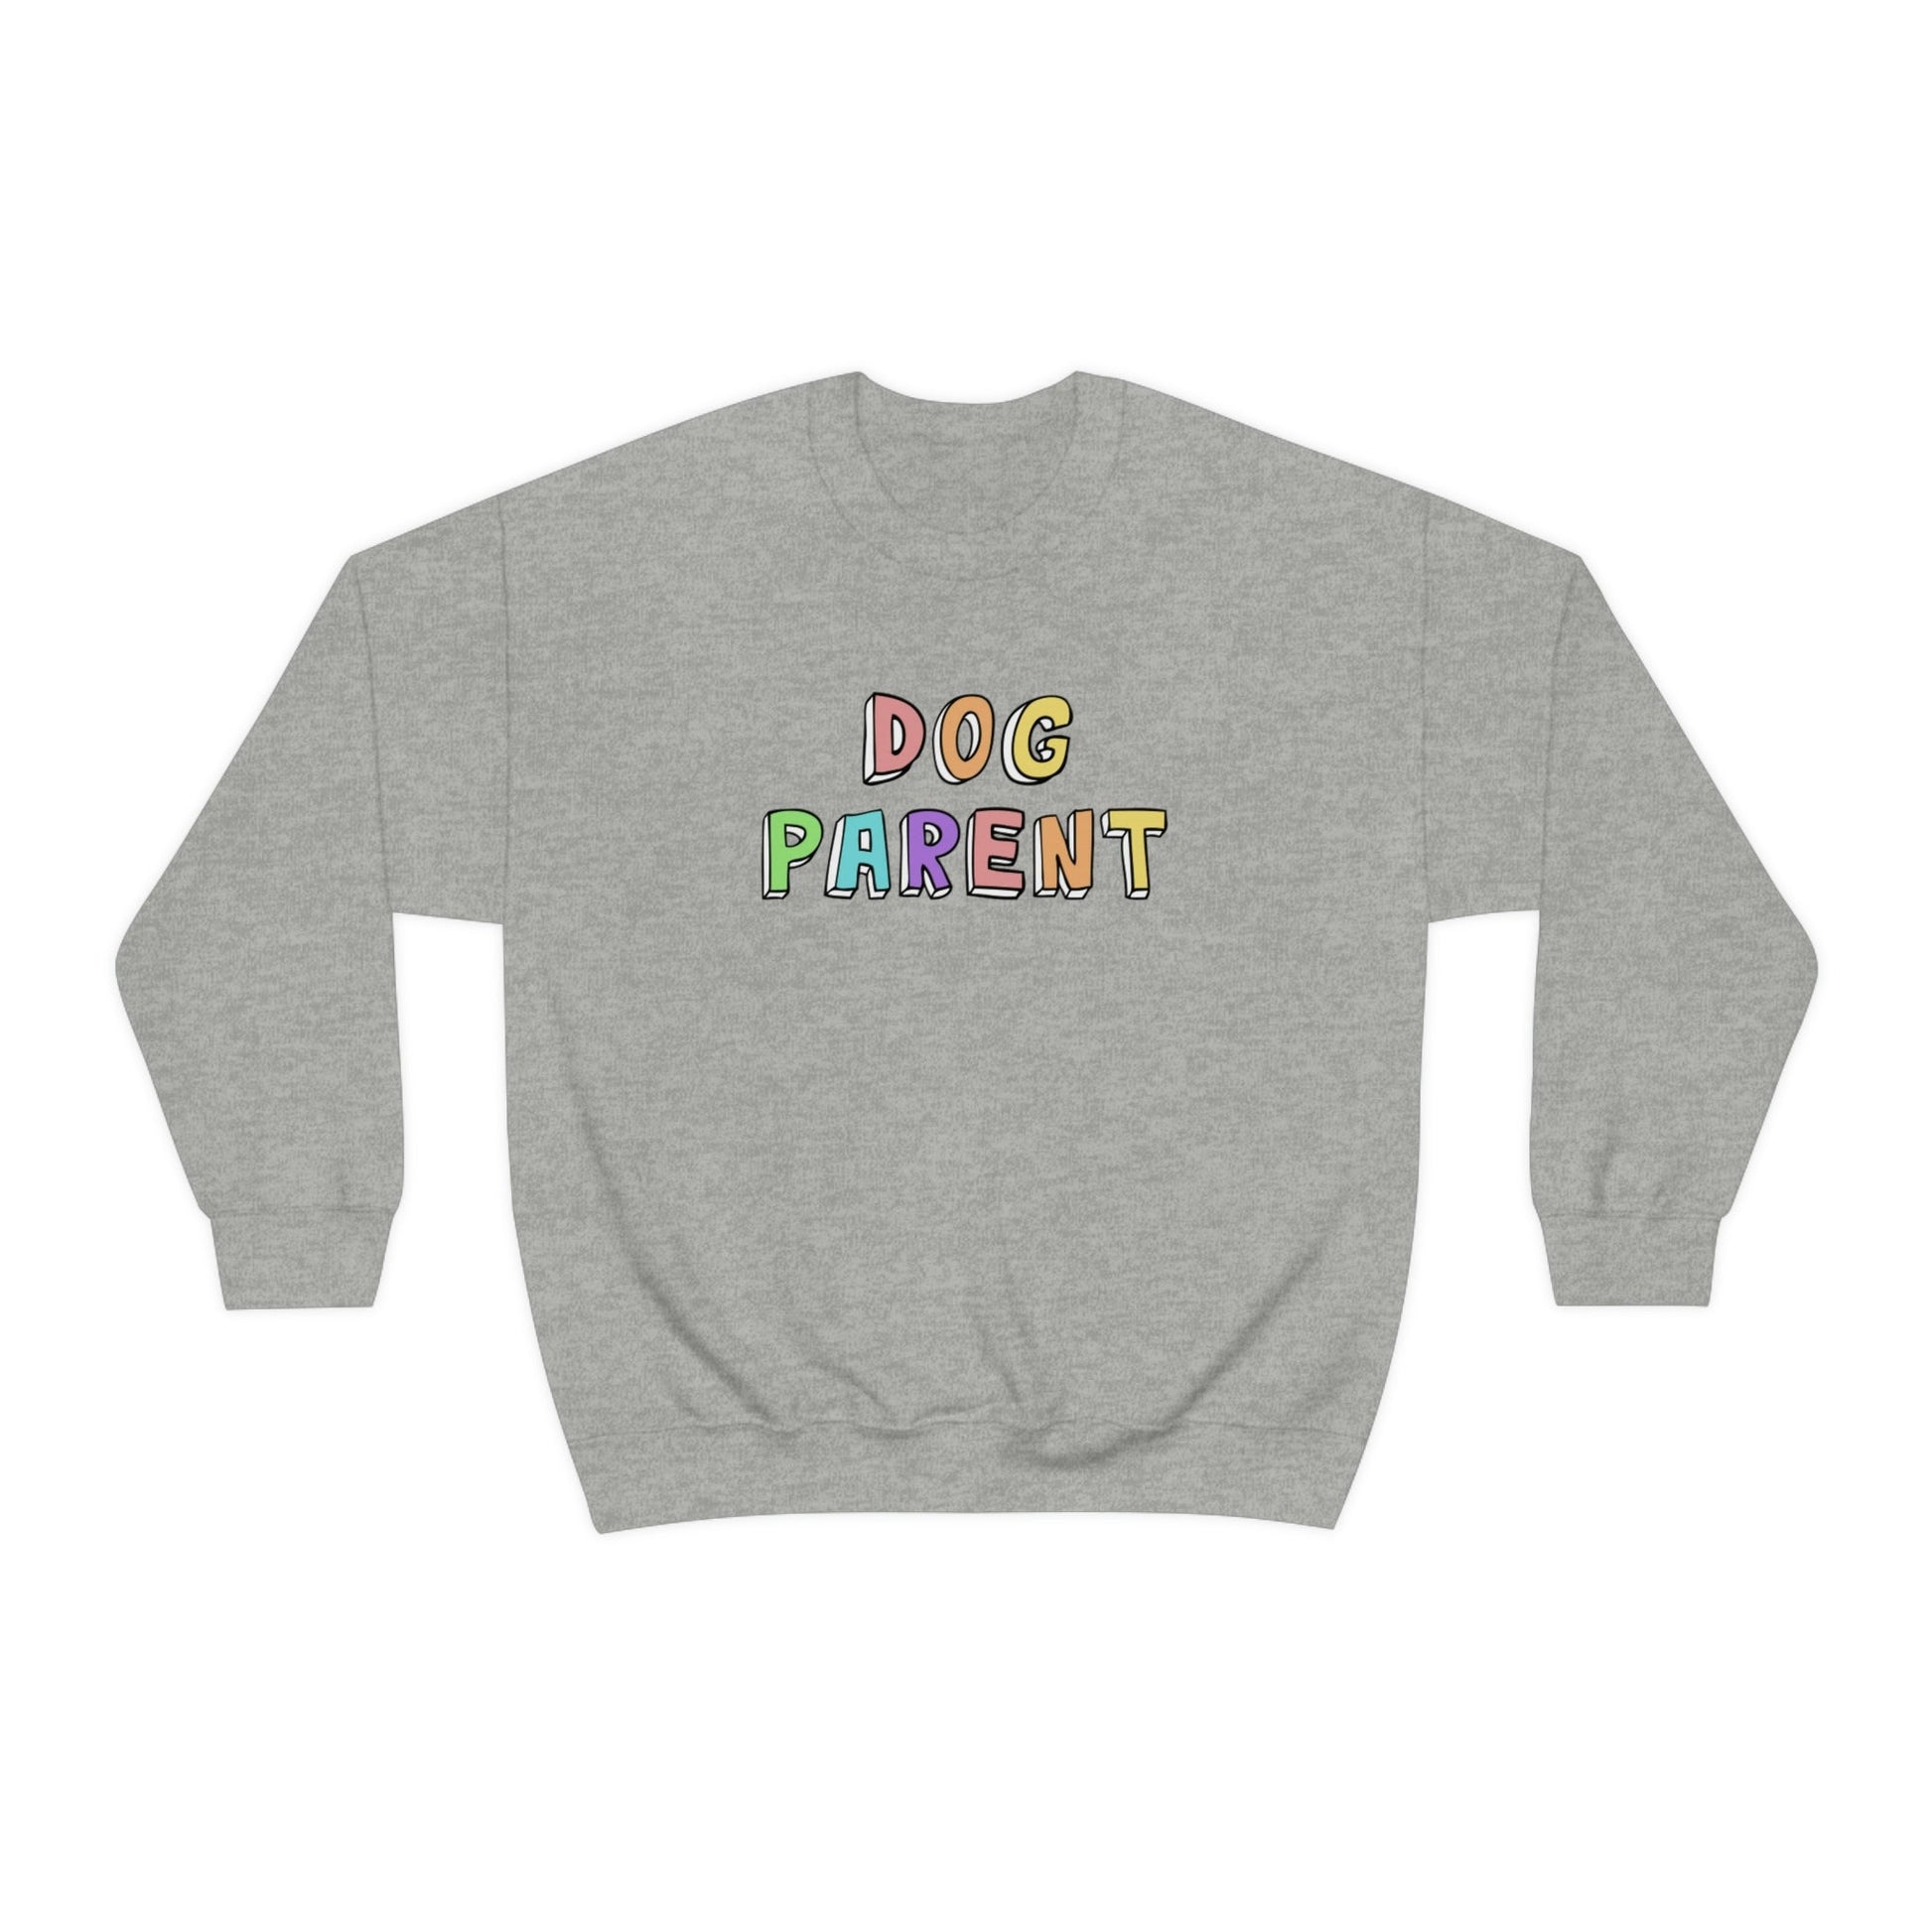 Dog Parent | Crewneck Sweatshirt - Detezi Designs-30069519031386160633